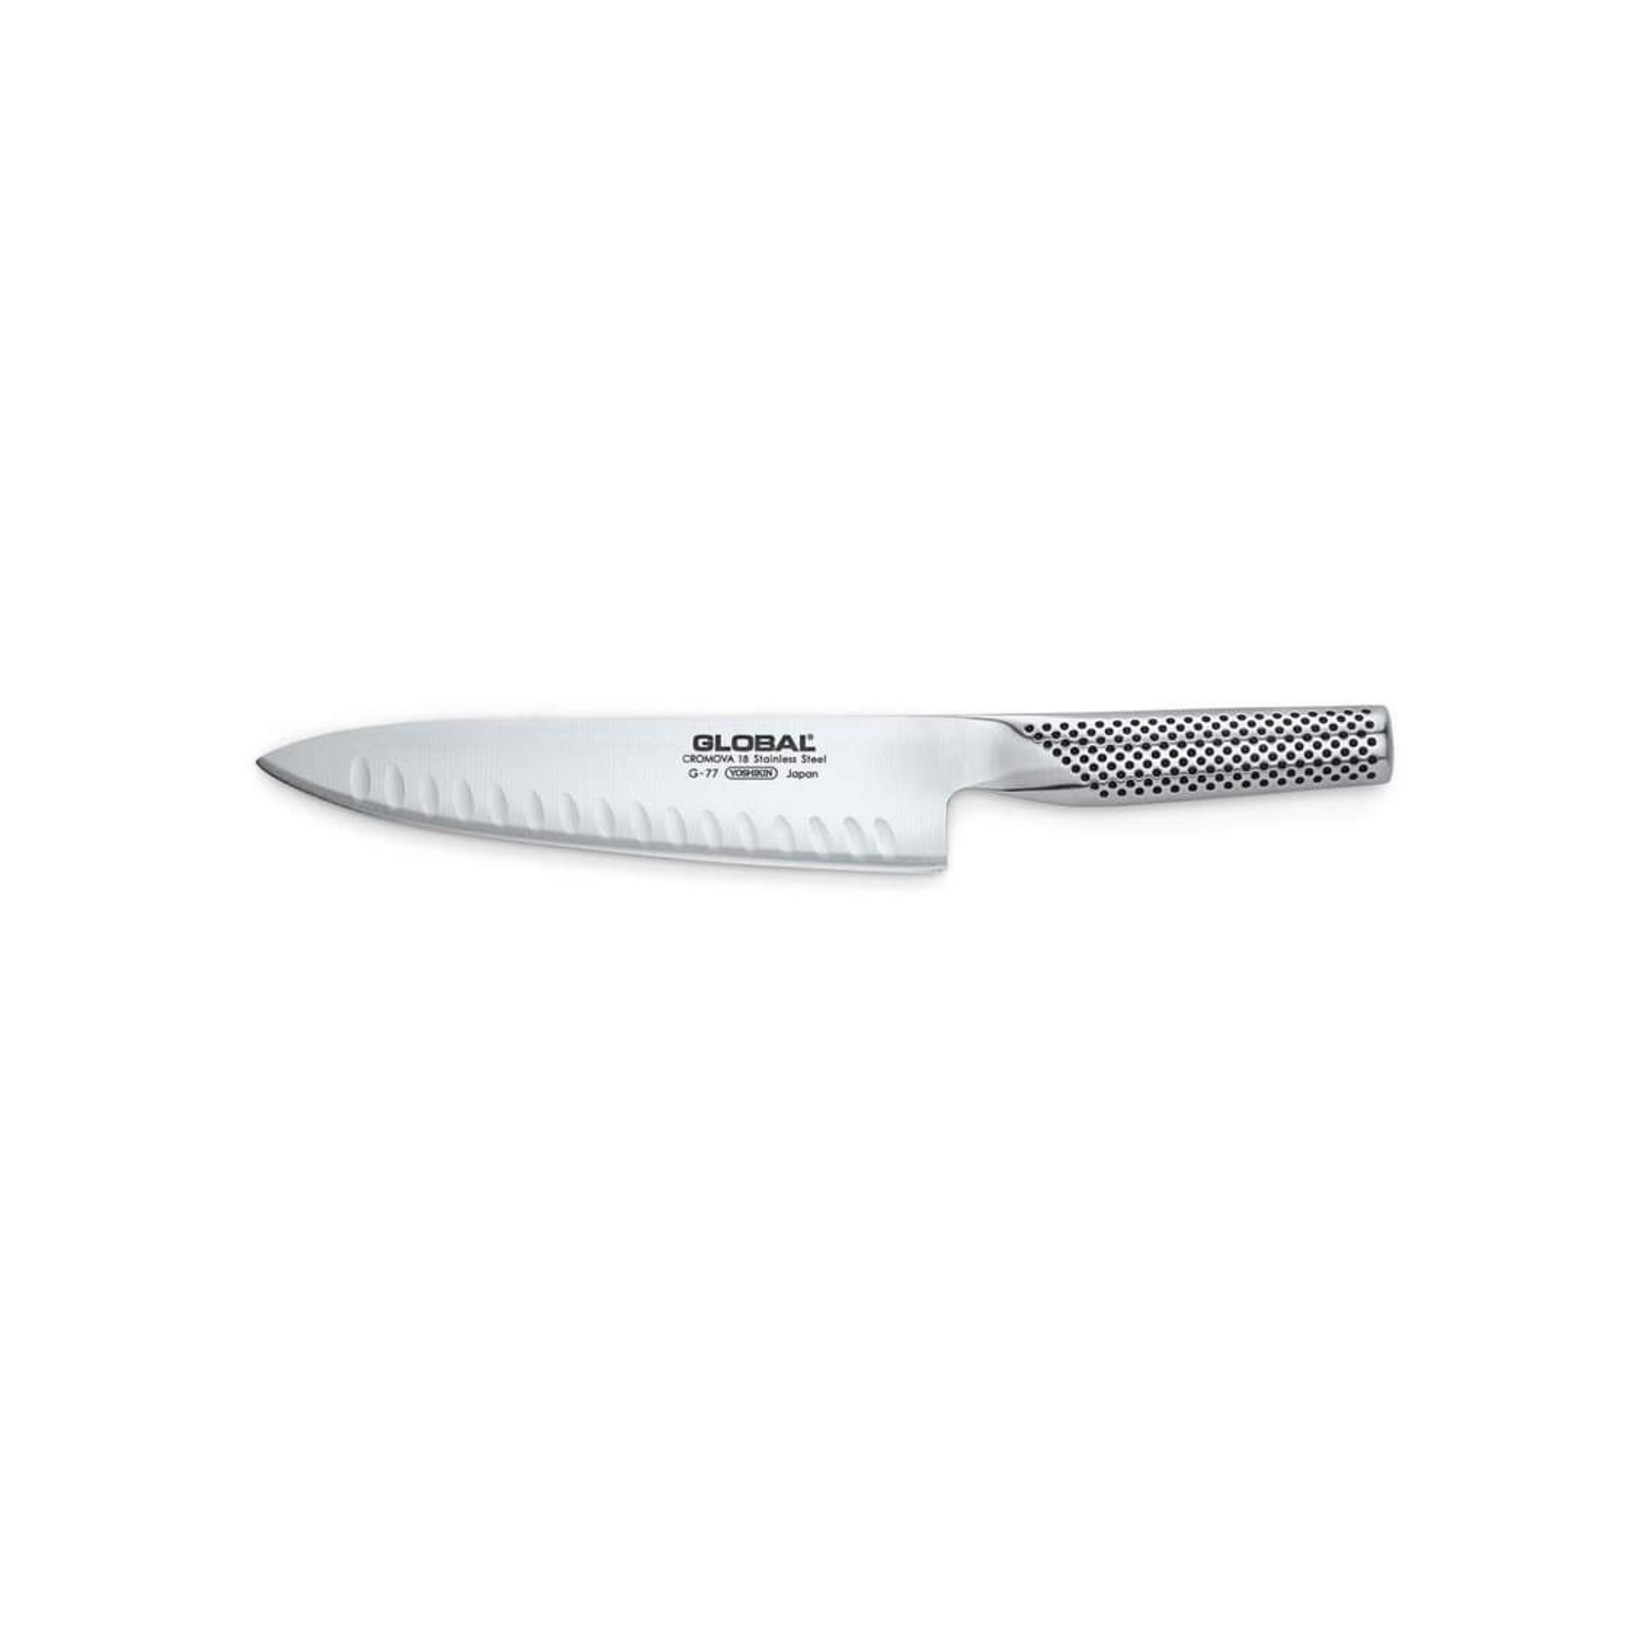 GLOBAL GLOBAL Fluted Chef Knife G77 20cm